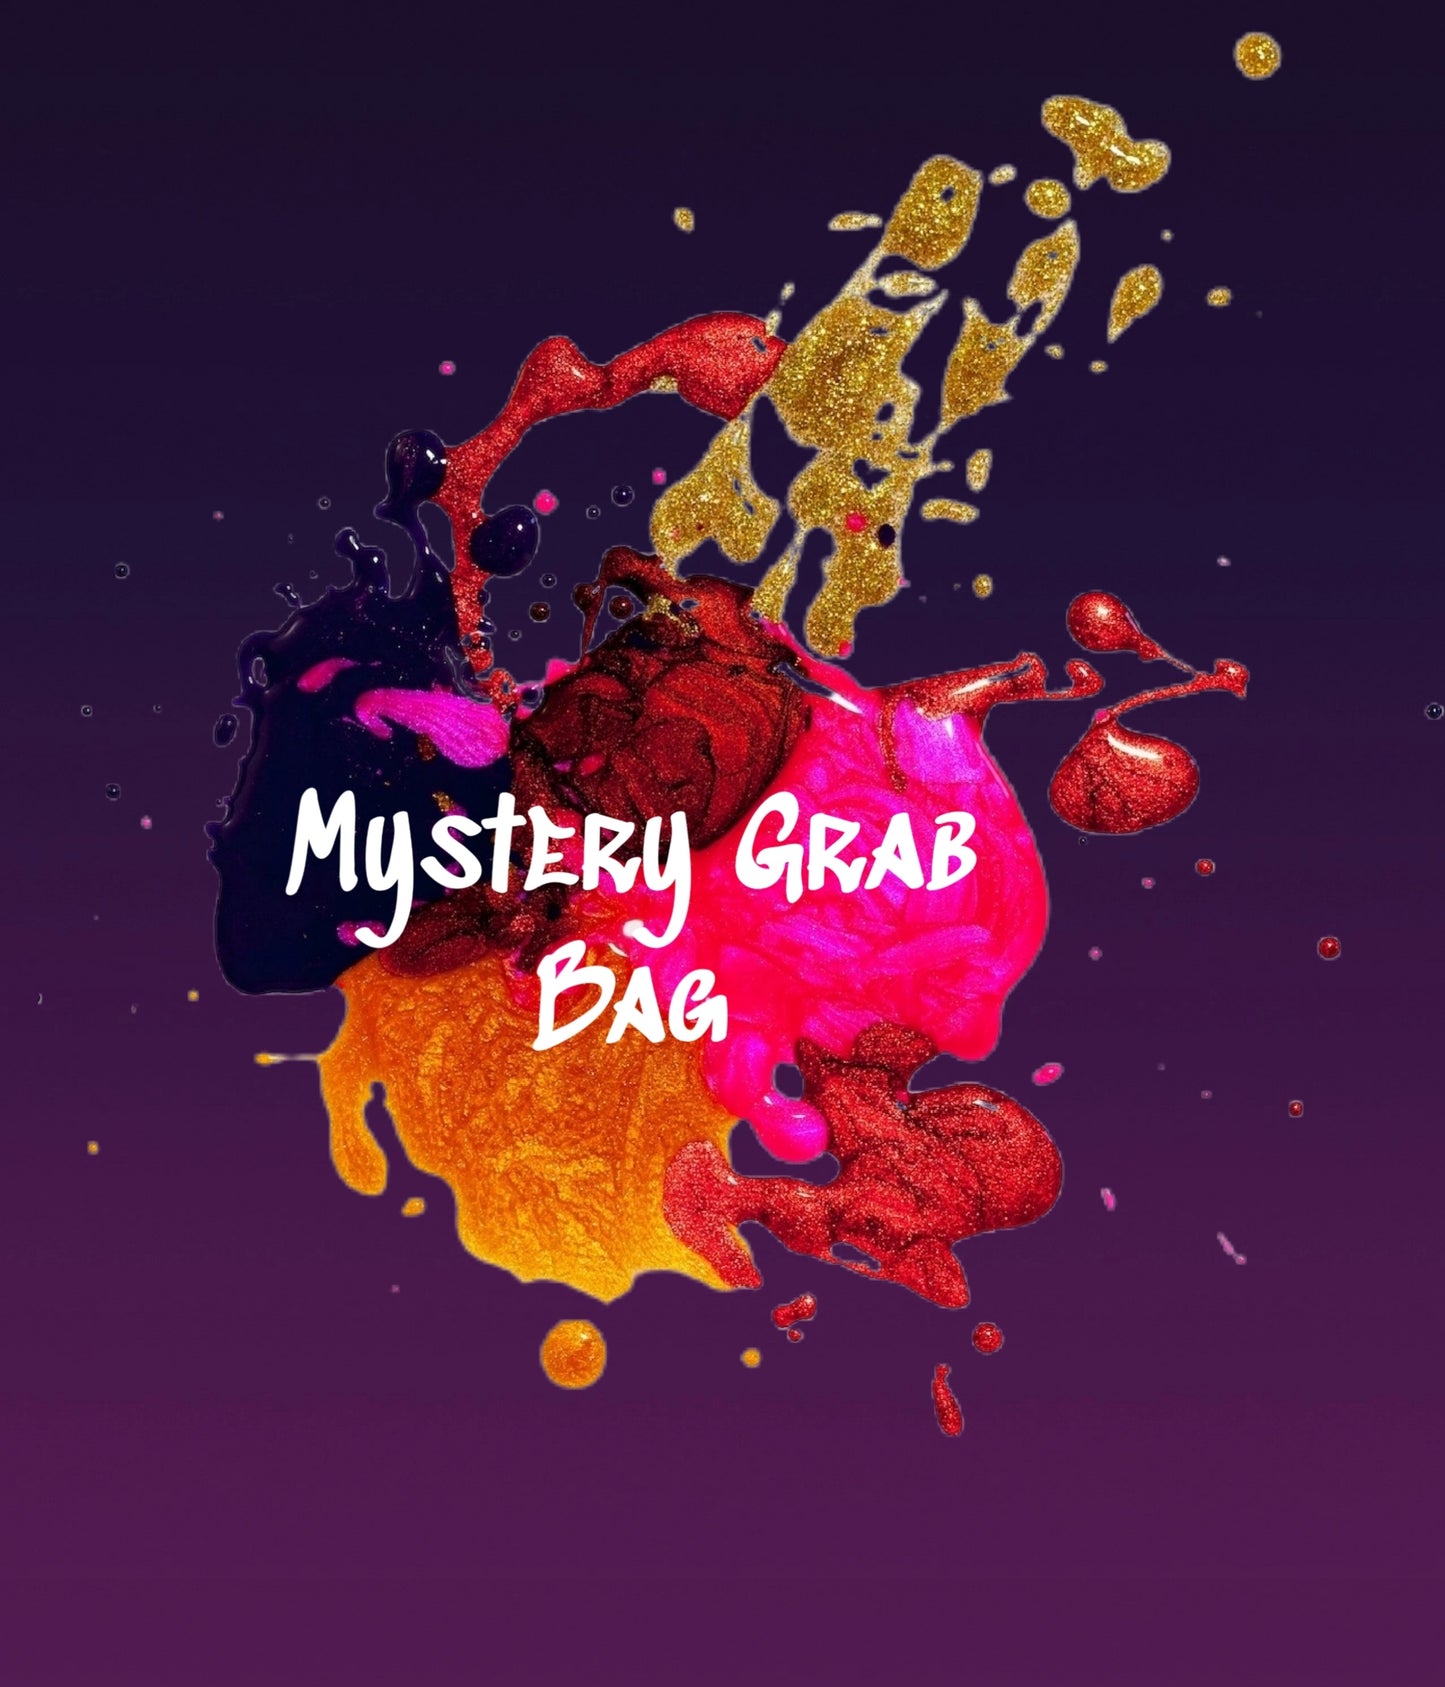 Mystery Grab bag